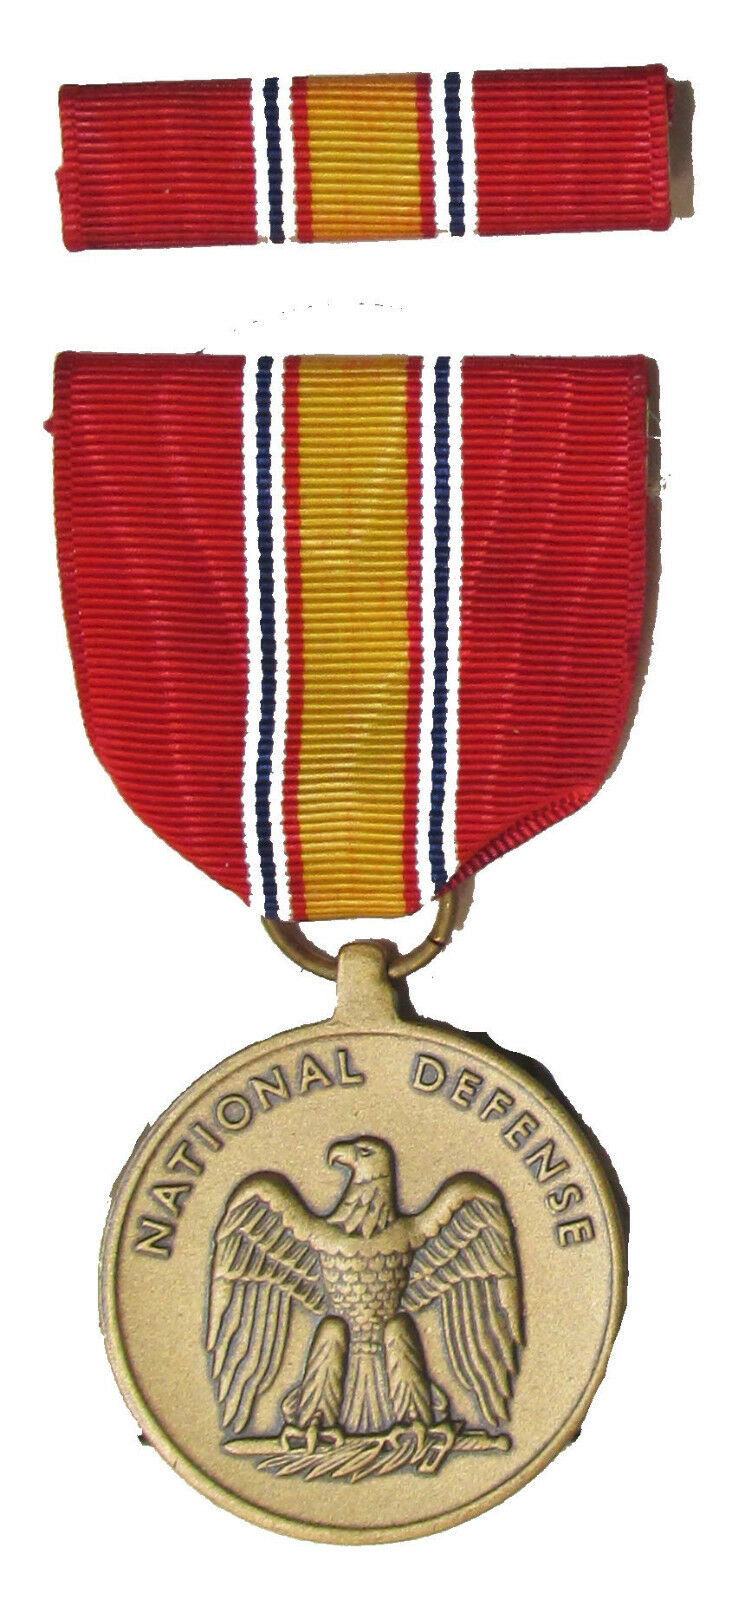 Authentic National Defense Medal & Ribbon Set - Genuine U.S. Military Medal